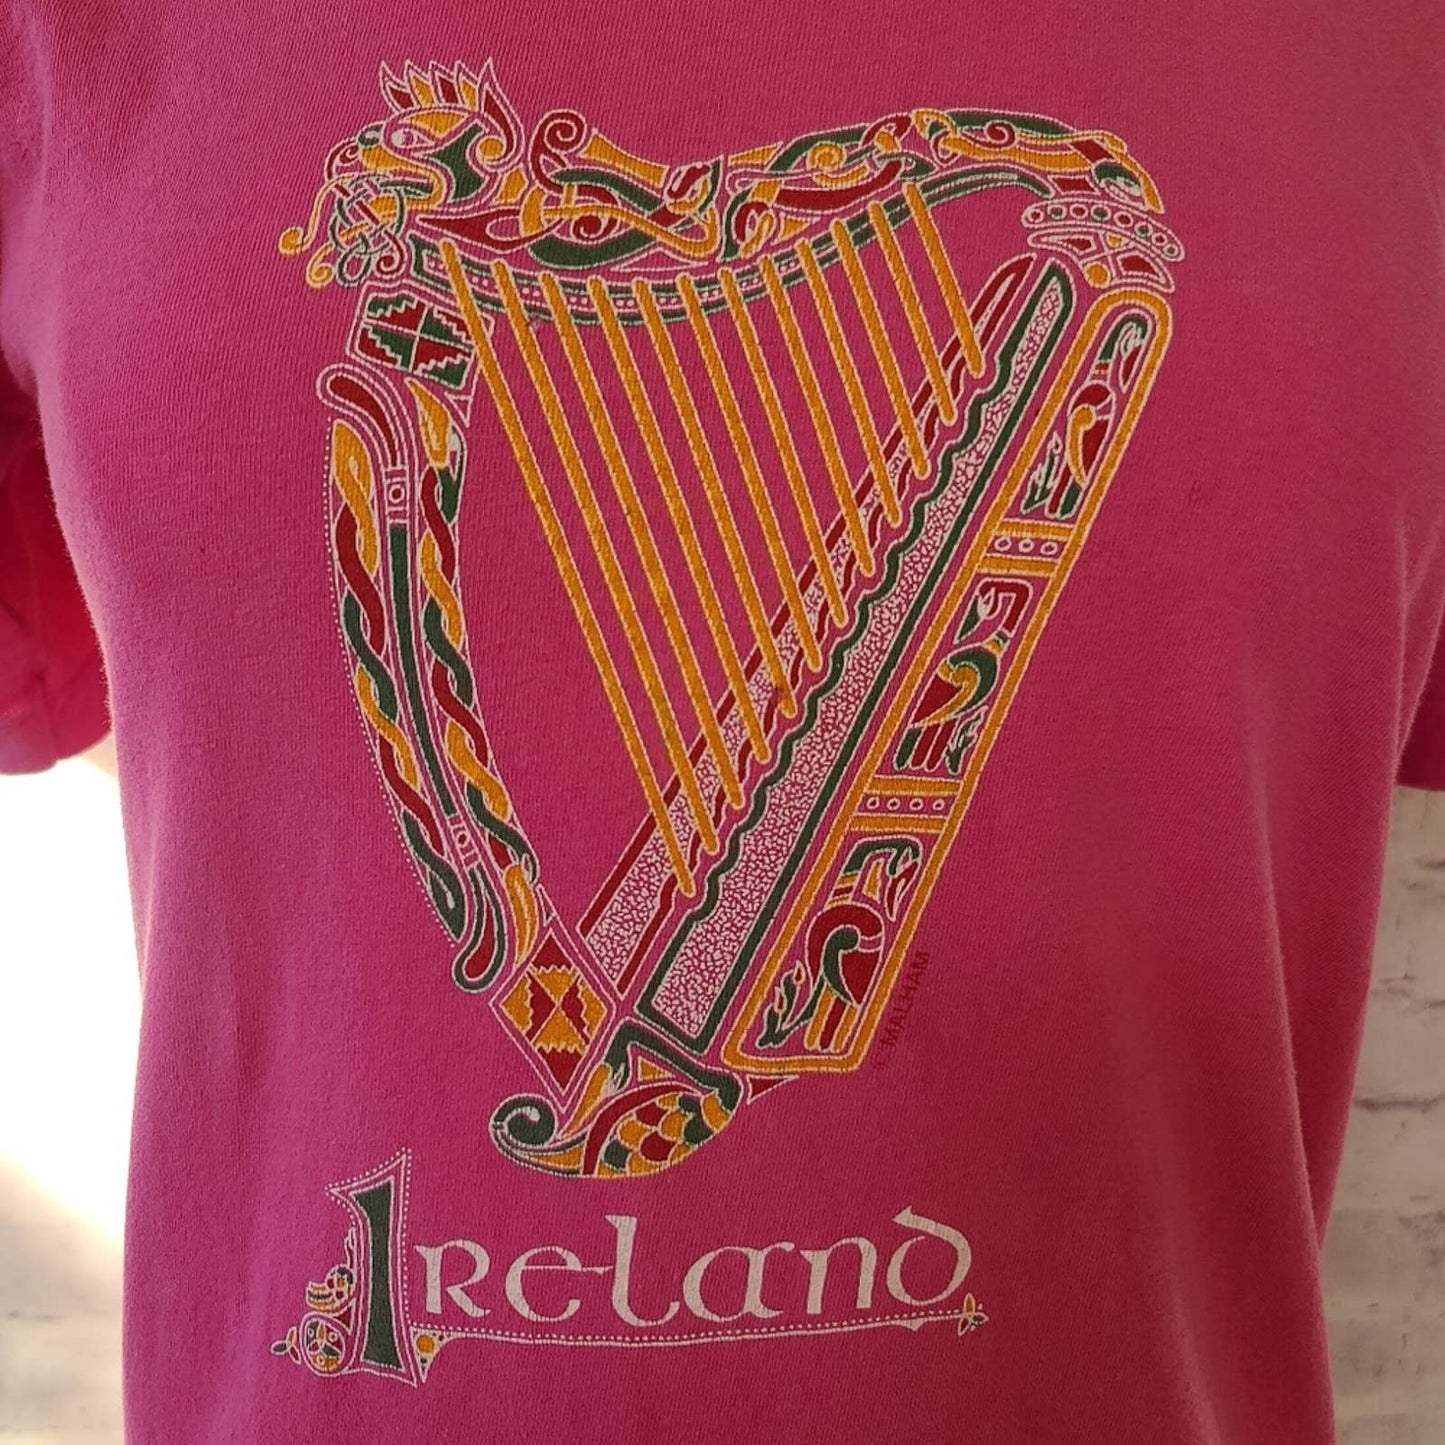 Vintage Dolman Design Made in Ireland Harp Print Single Stitch Tee Pink Medium